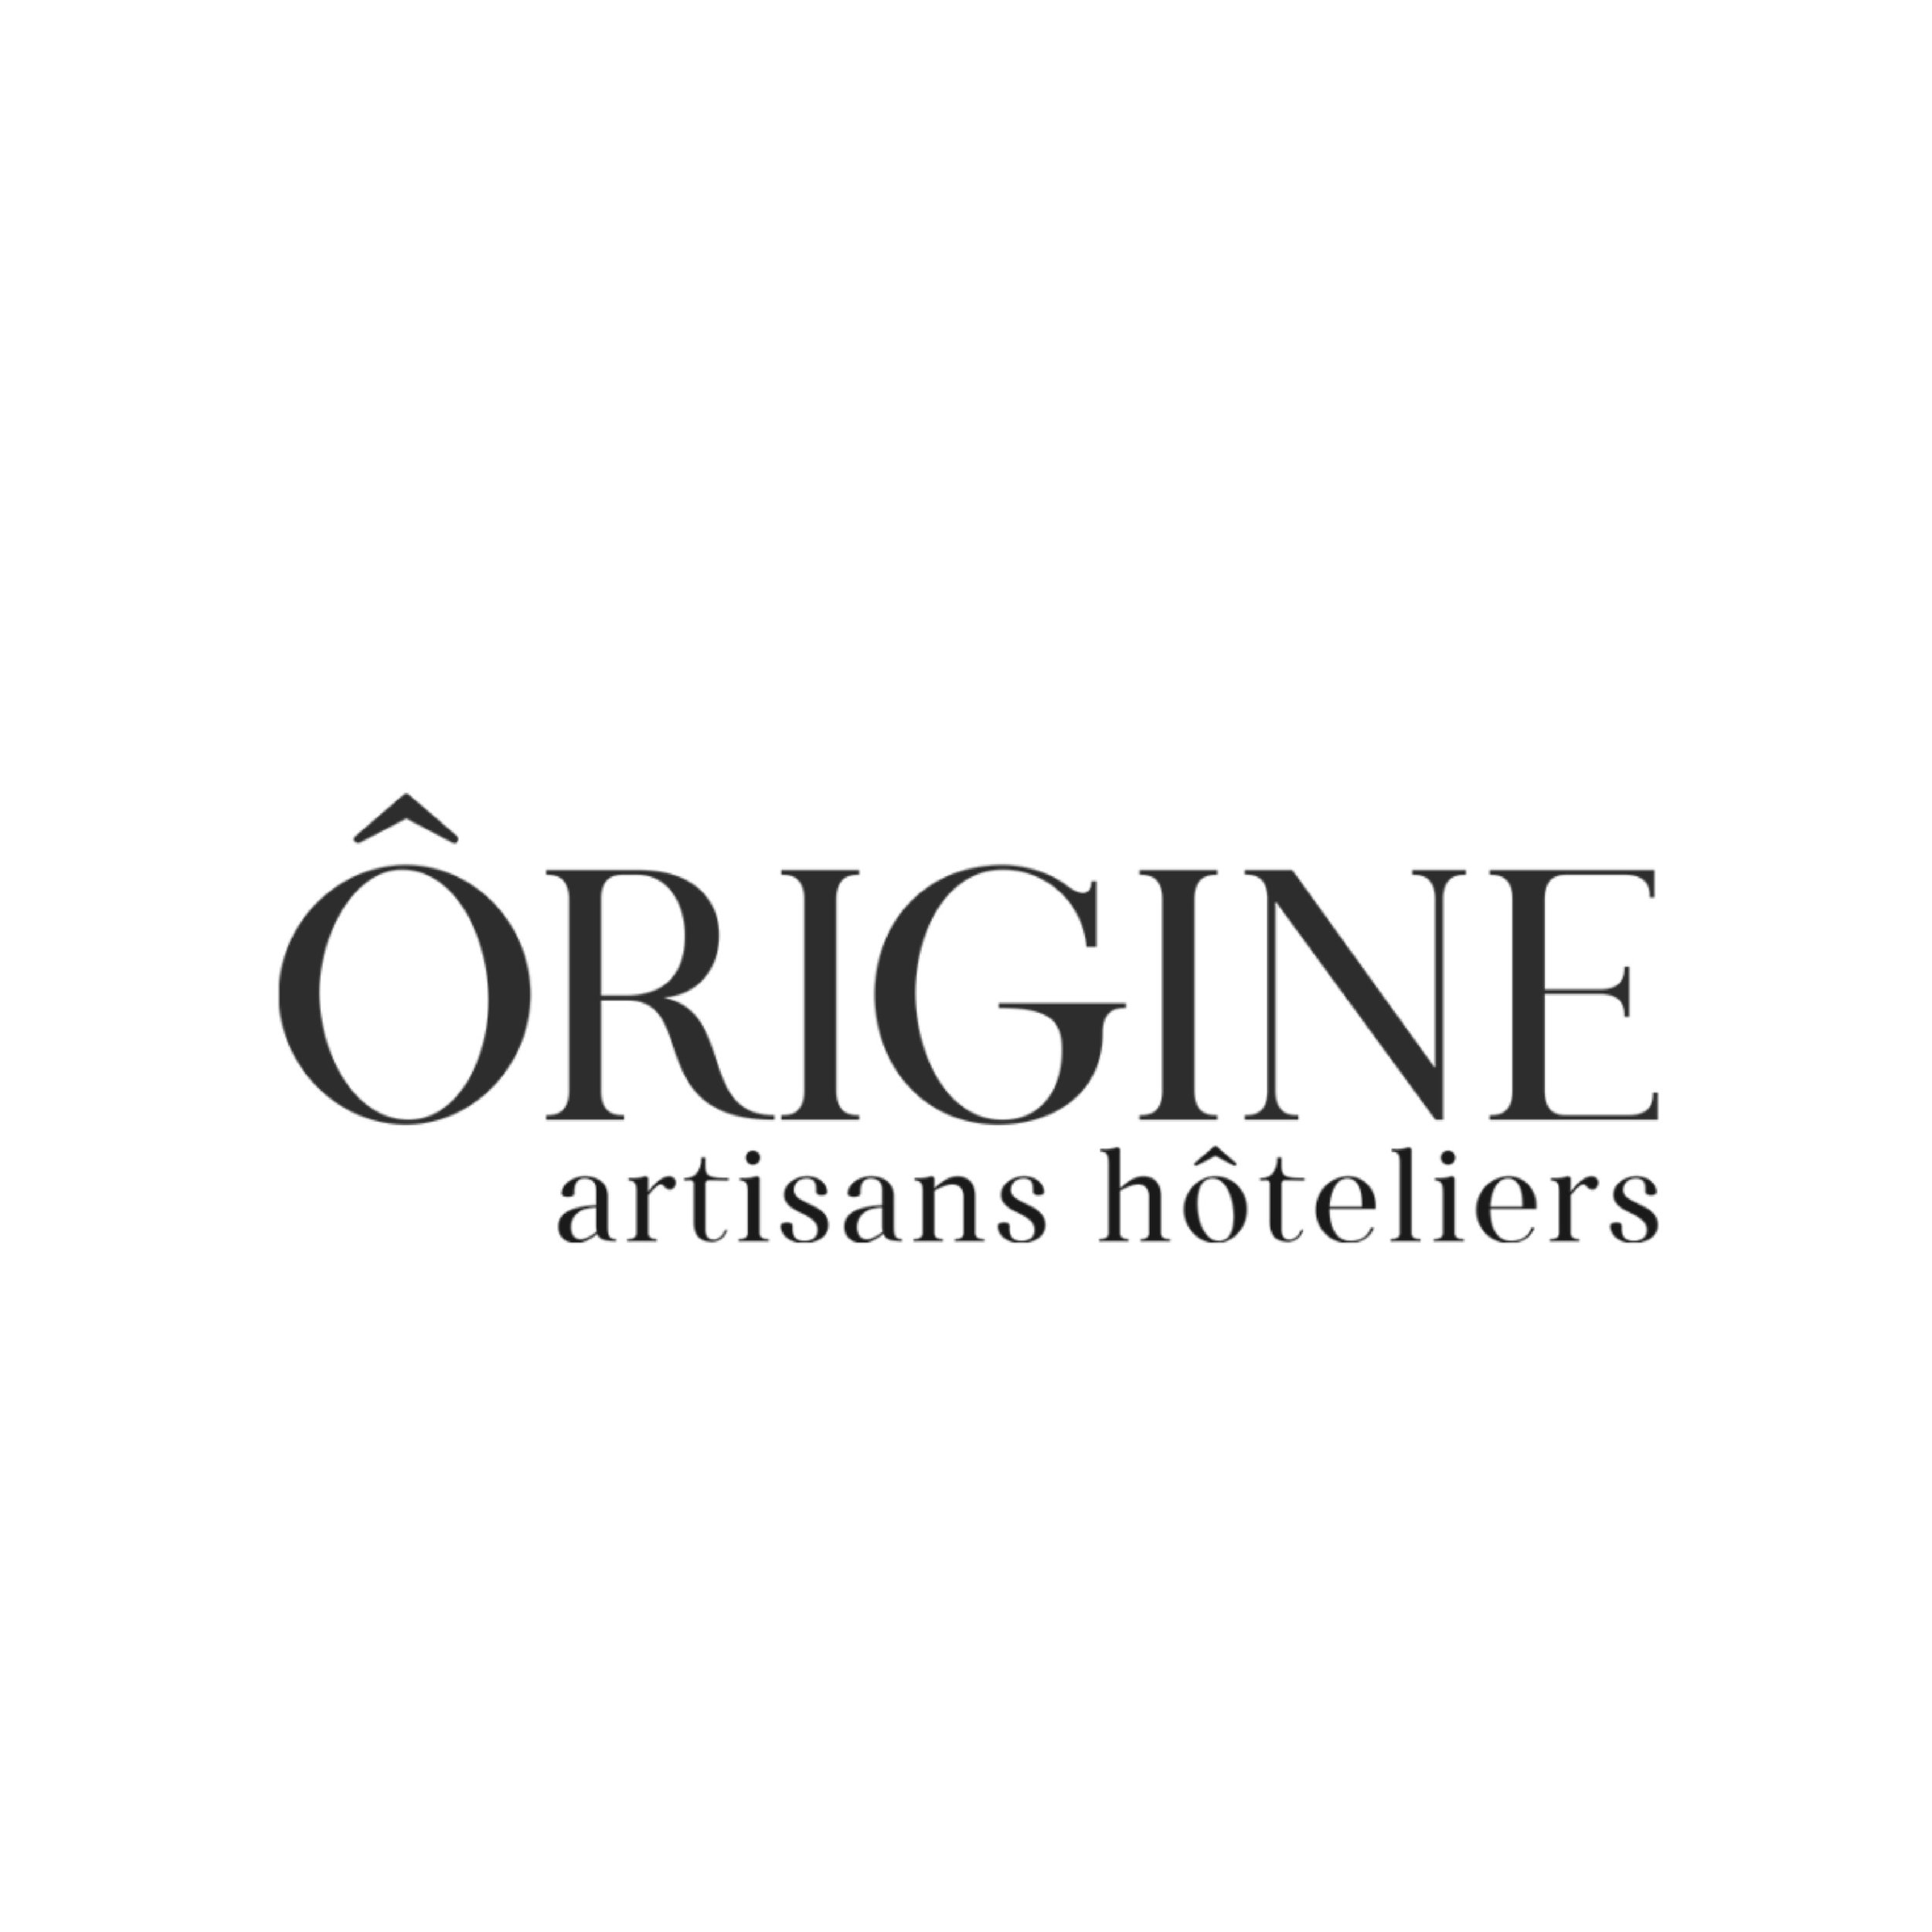 Origine artisans hôteliers